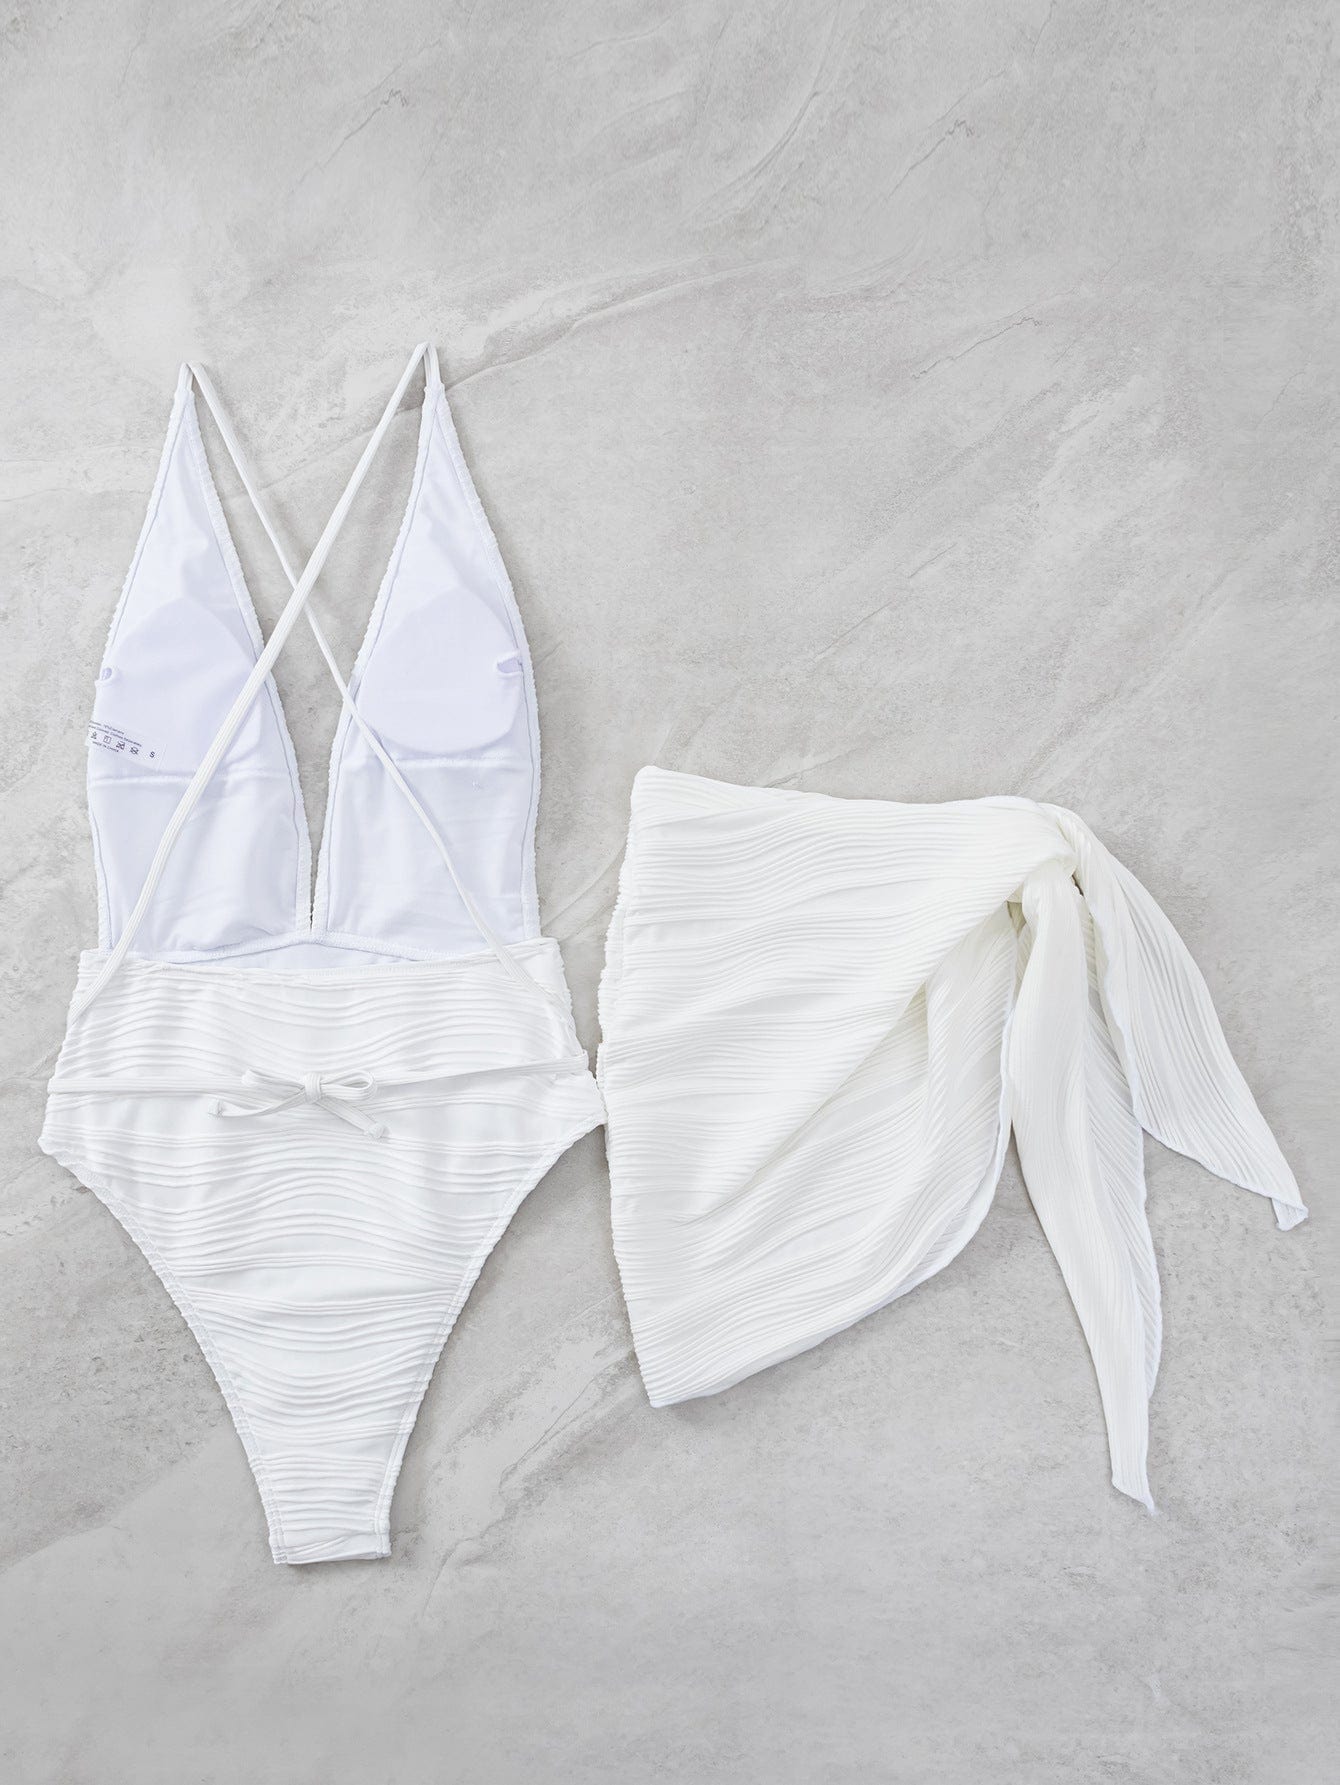 Glowwom White textured deep V one-piece swimsuit